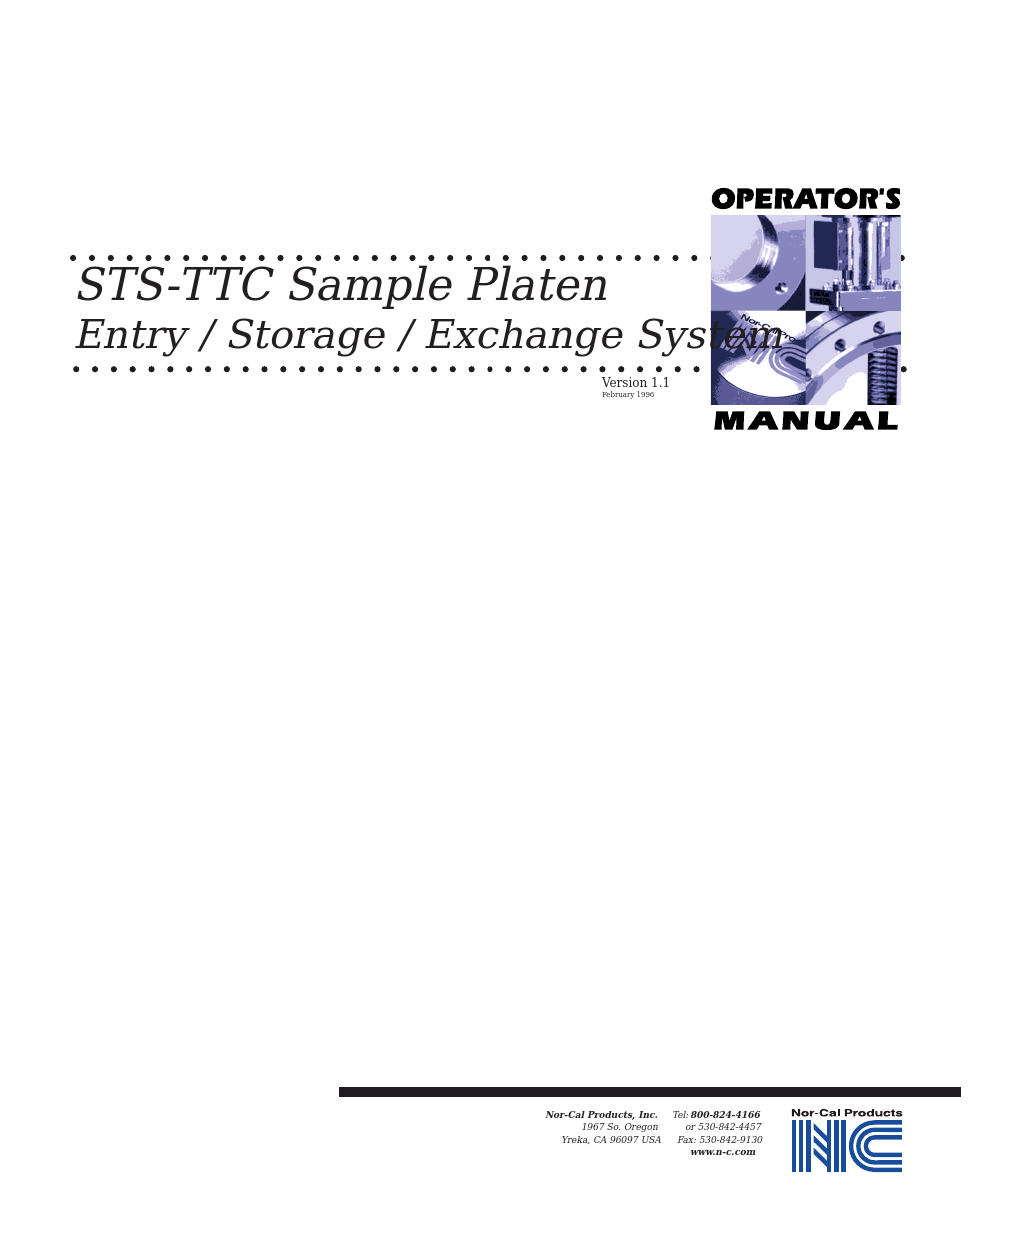 STS-TTC Sample Platen